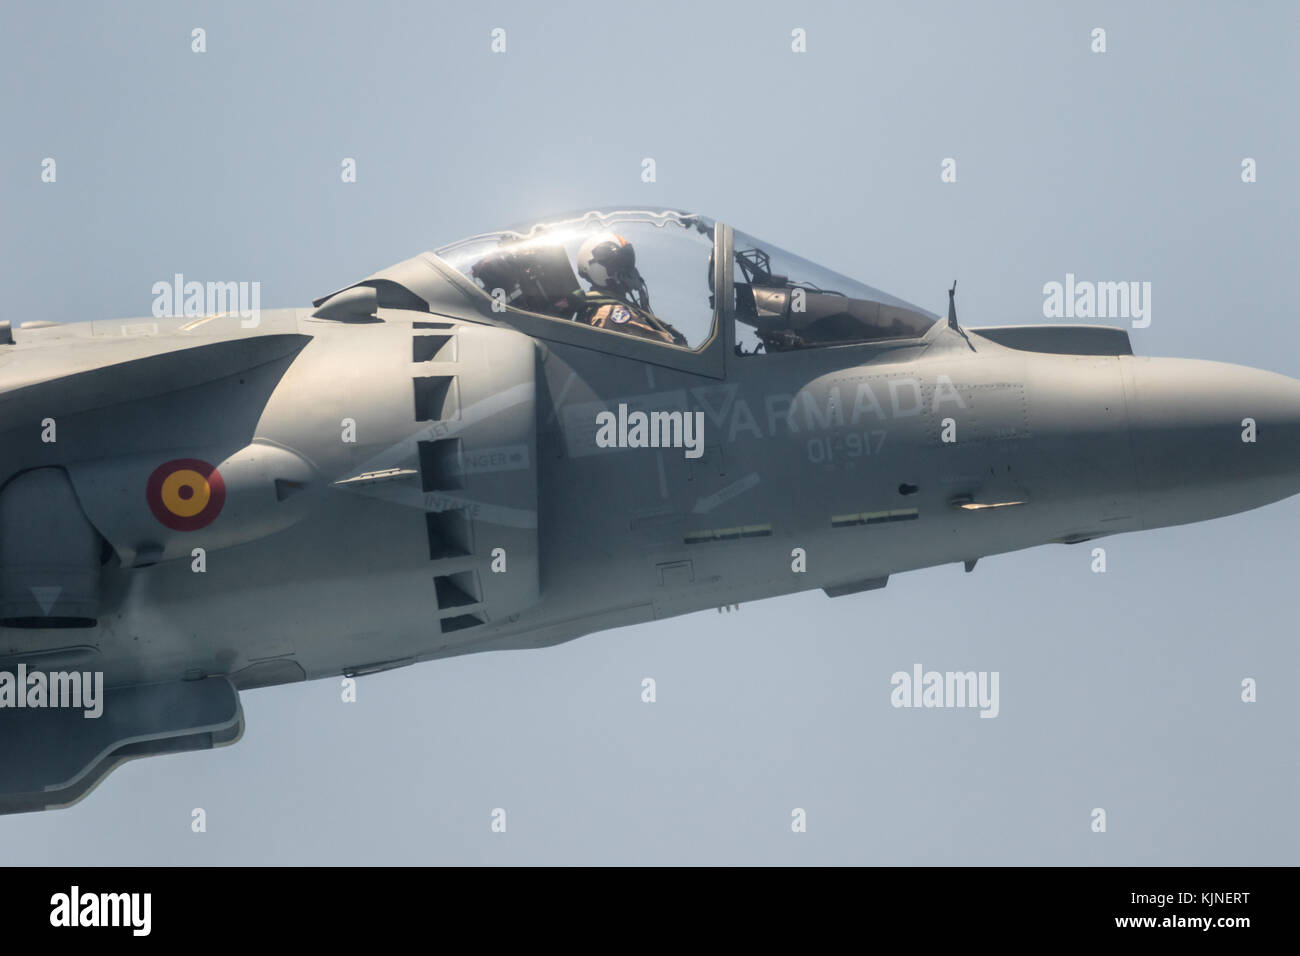 MOTRIL, GRANADA, SPAIN-JUN 11: Aircraft AV-8B Harrier Plus taking part in an exhibition on the 12th international airshow of Motril on Jun 11, 2017, i Stock Photo